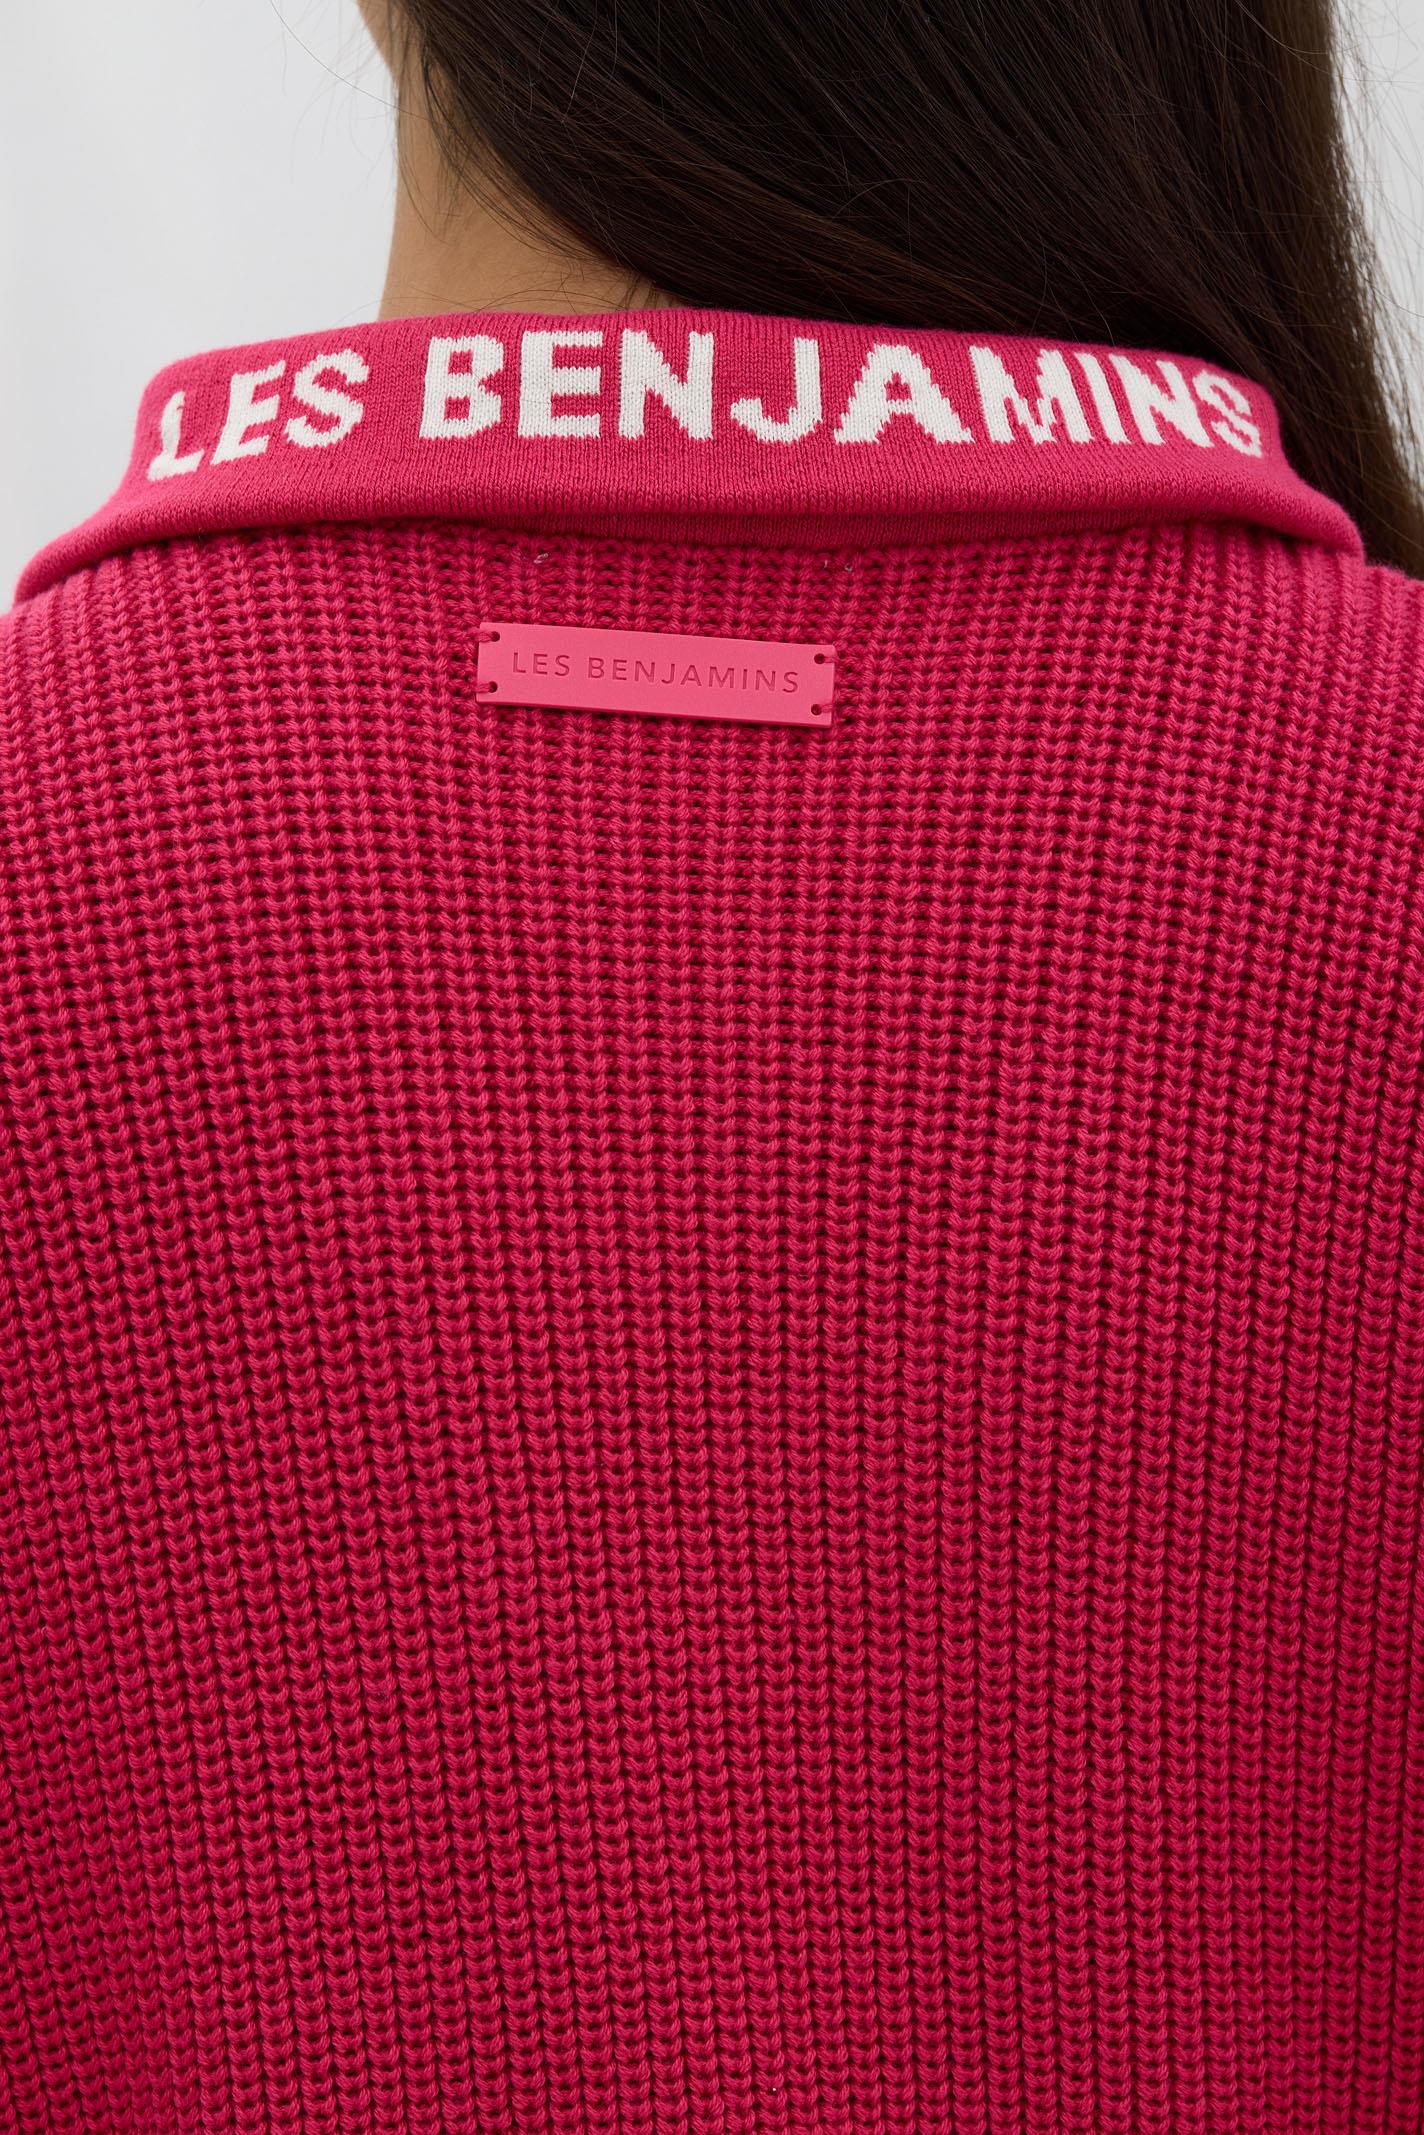 Les Benjamins Knitwear 305